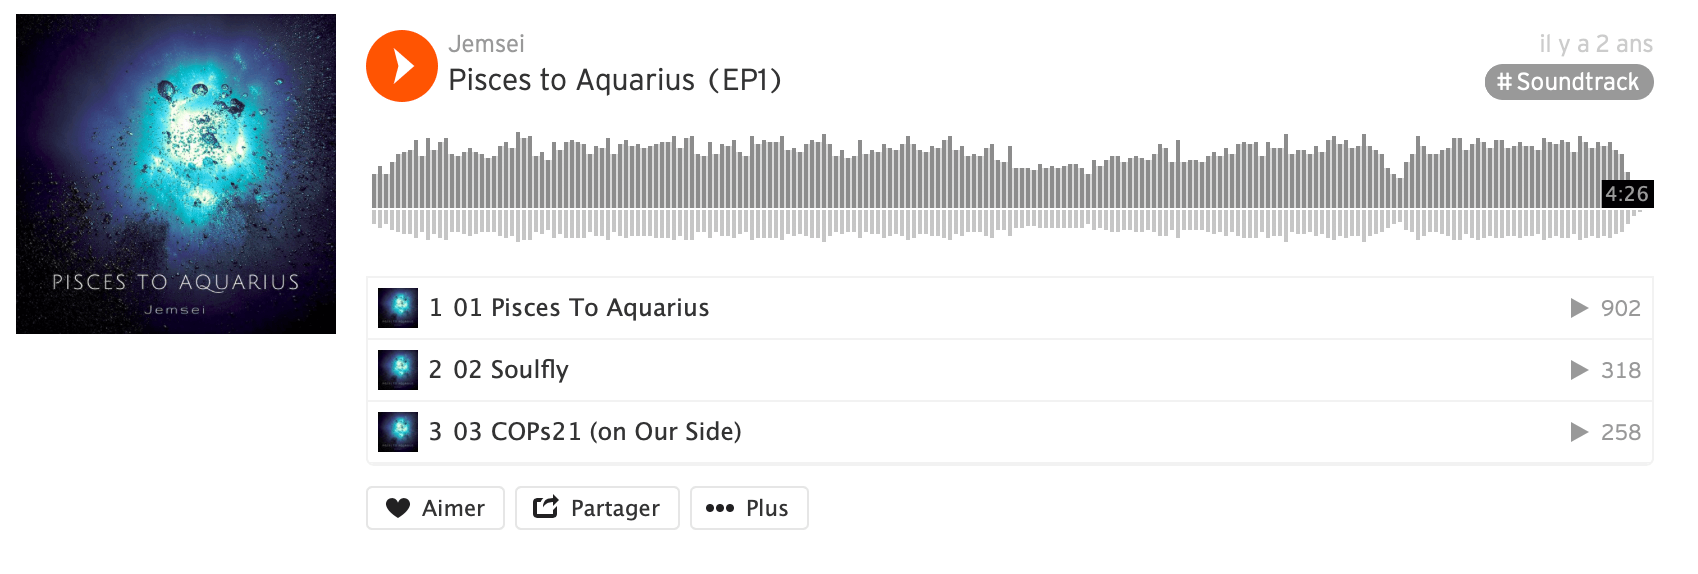 Image EP1 Pisces to Aquarius playlist